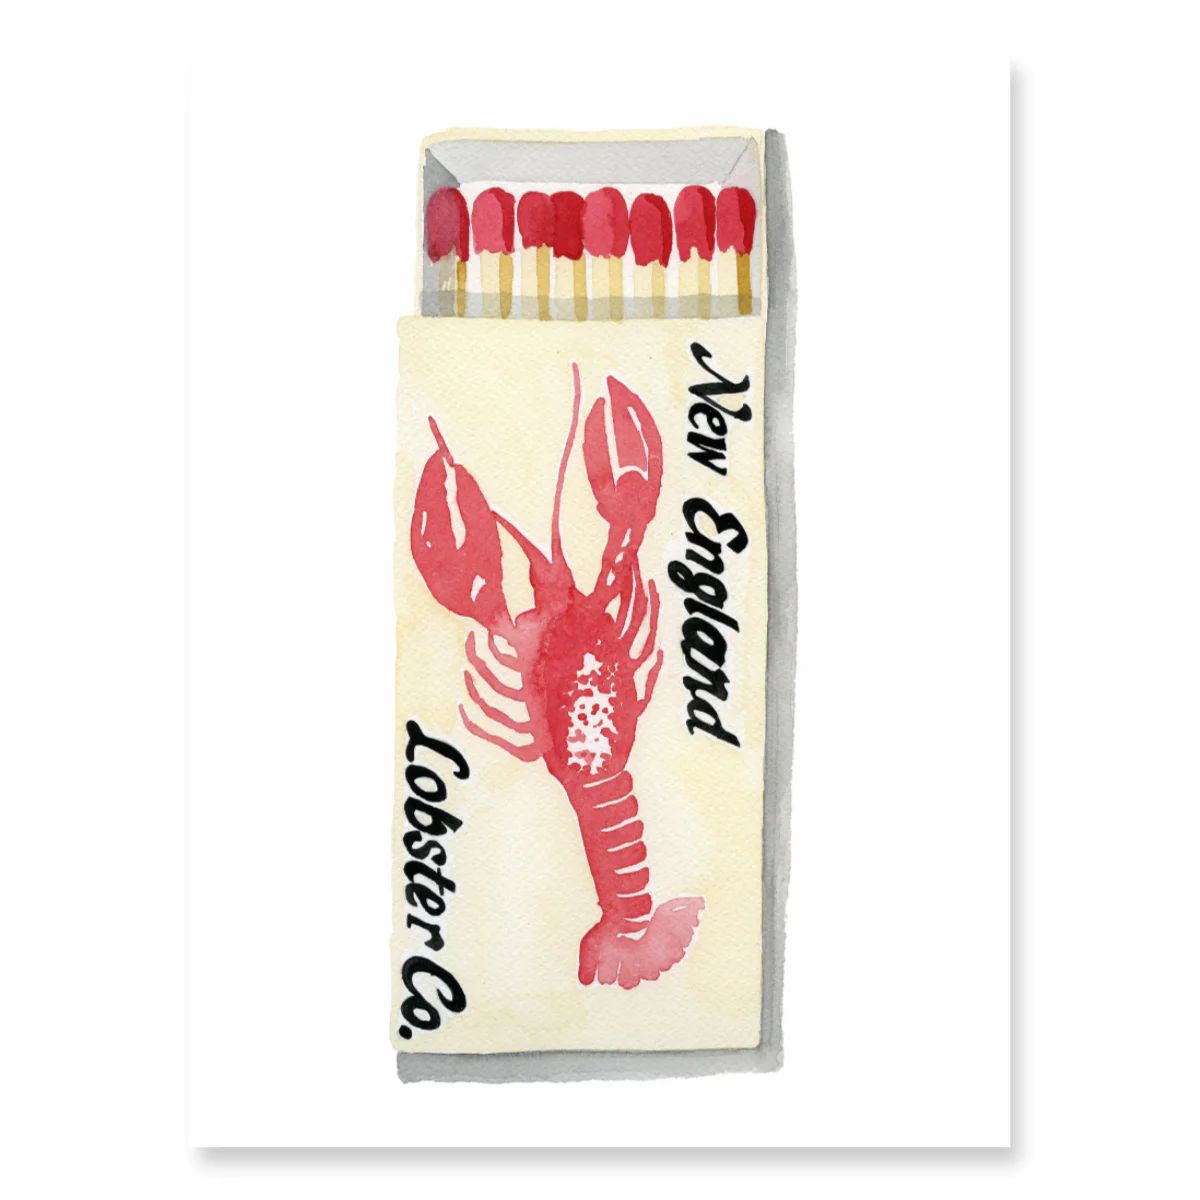 Furbish Studio - New England Lobster Co. Matchbook Watercolor Print | Furbish Studio